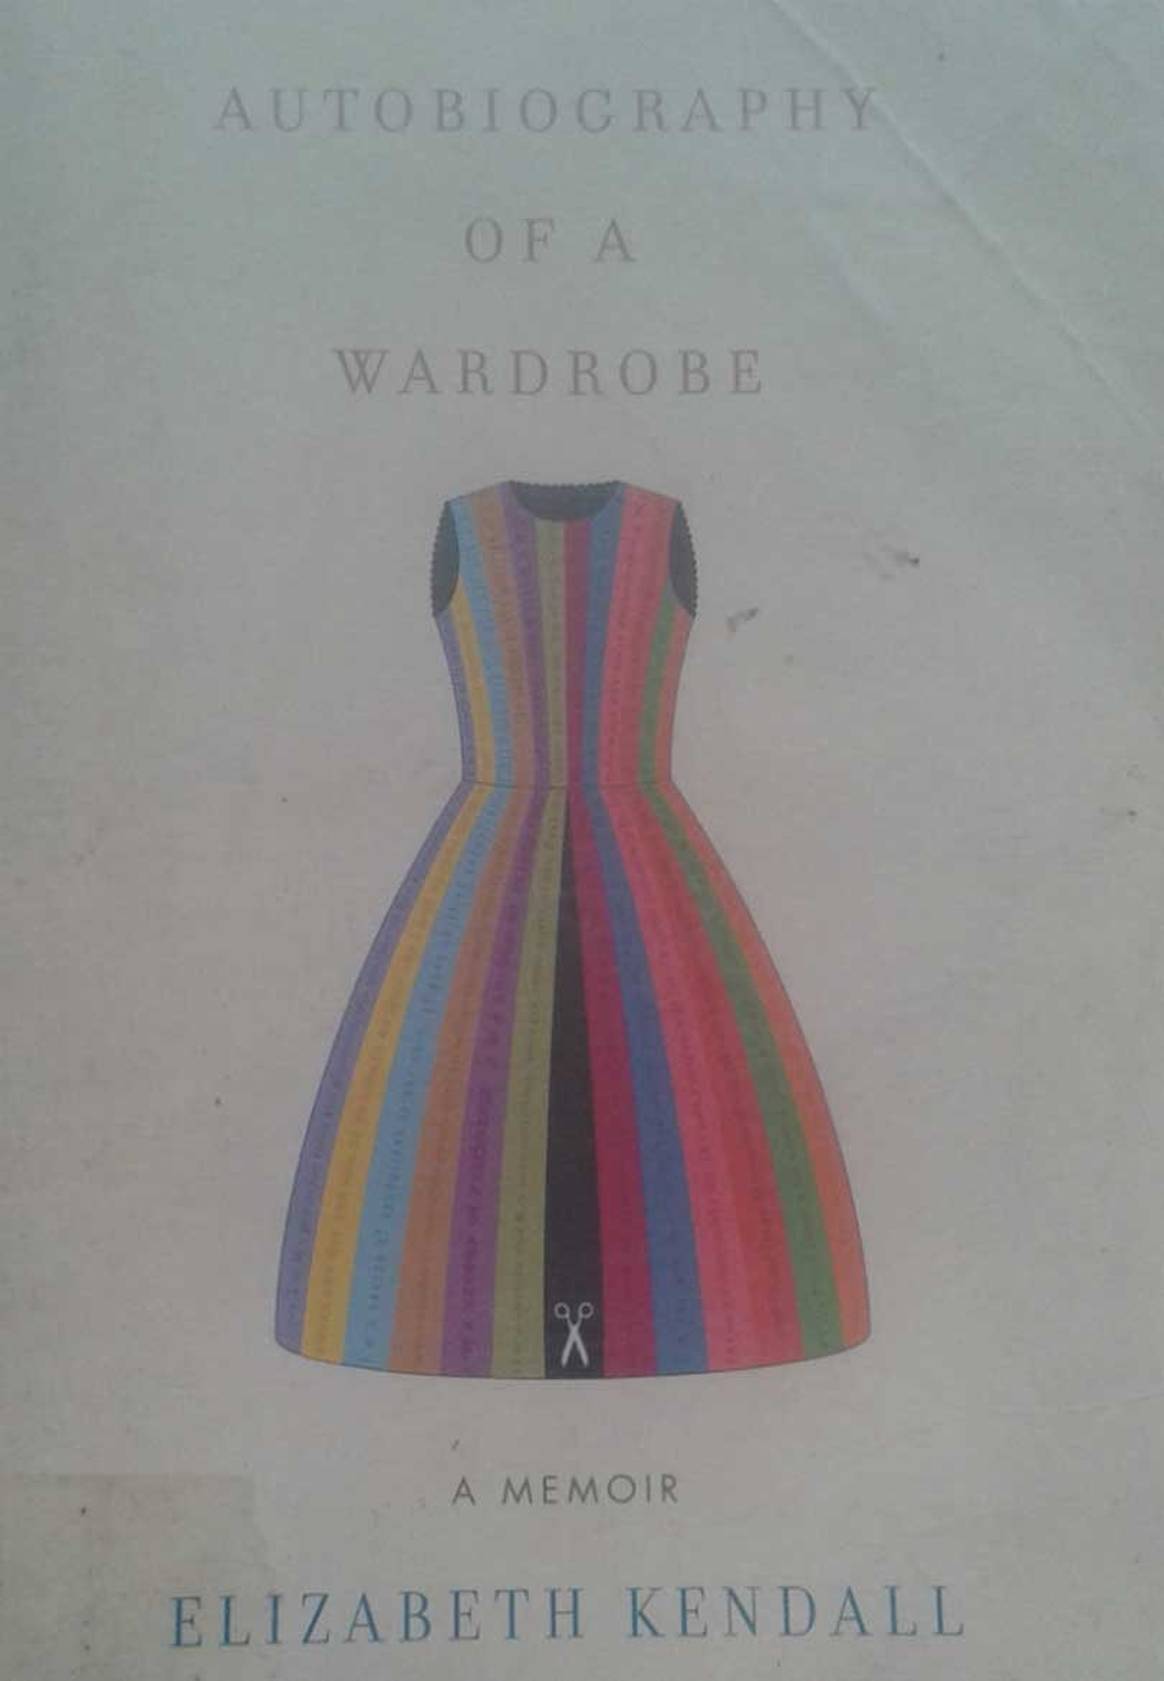 Lesetipp: „Autobiography of a Wardrobe“